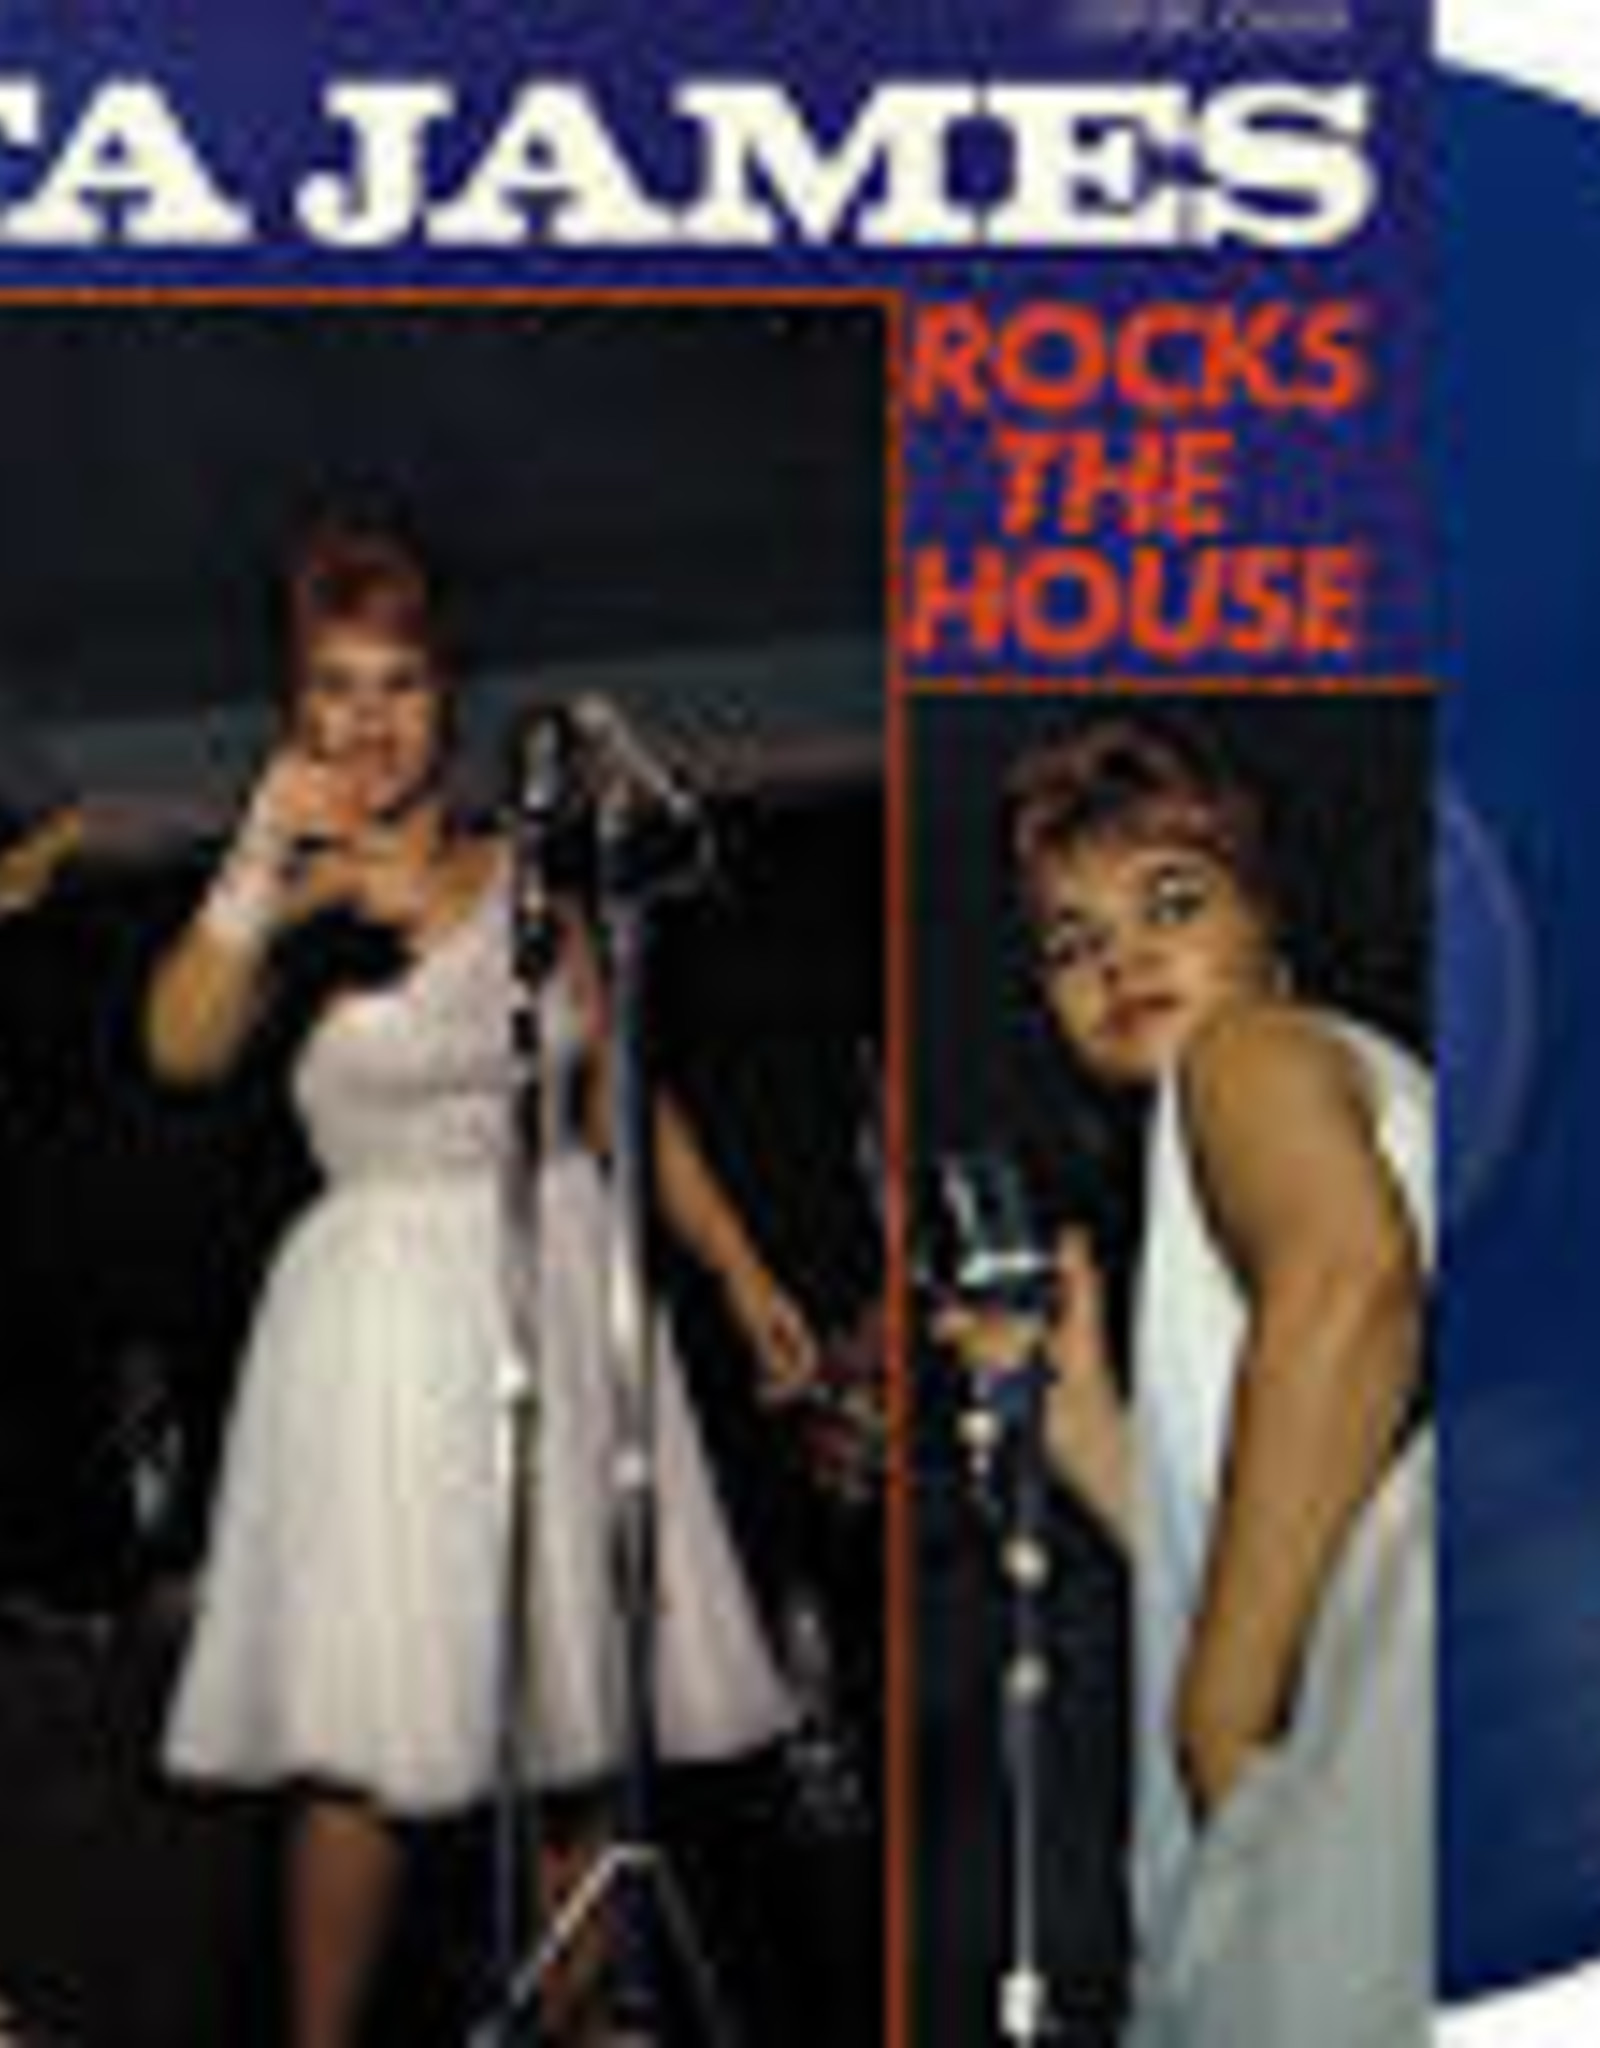 Etta James - Rocks the House (Blue Vinyl)